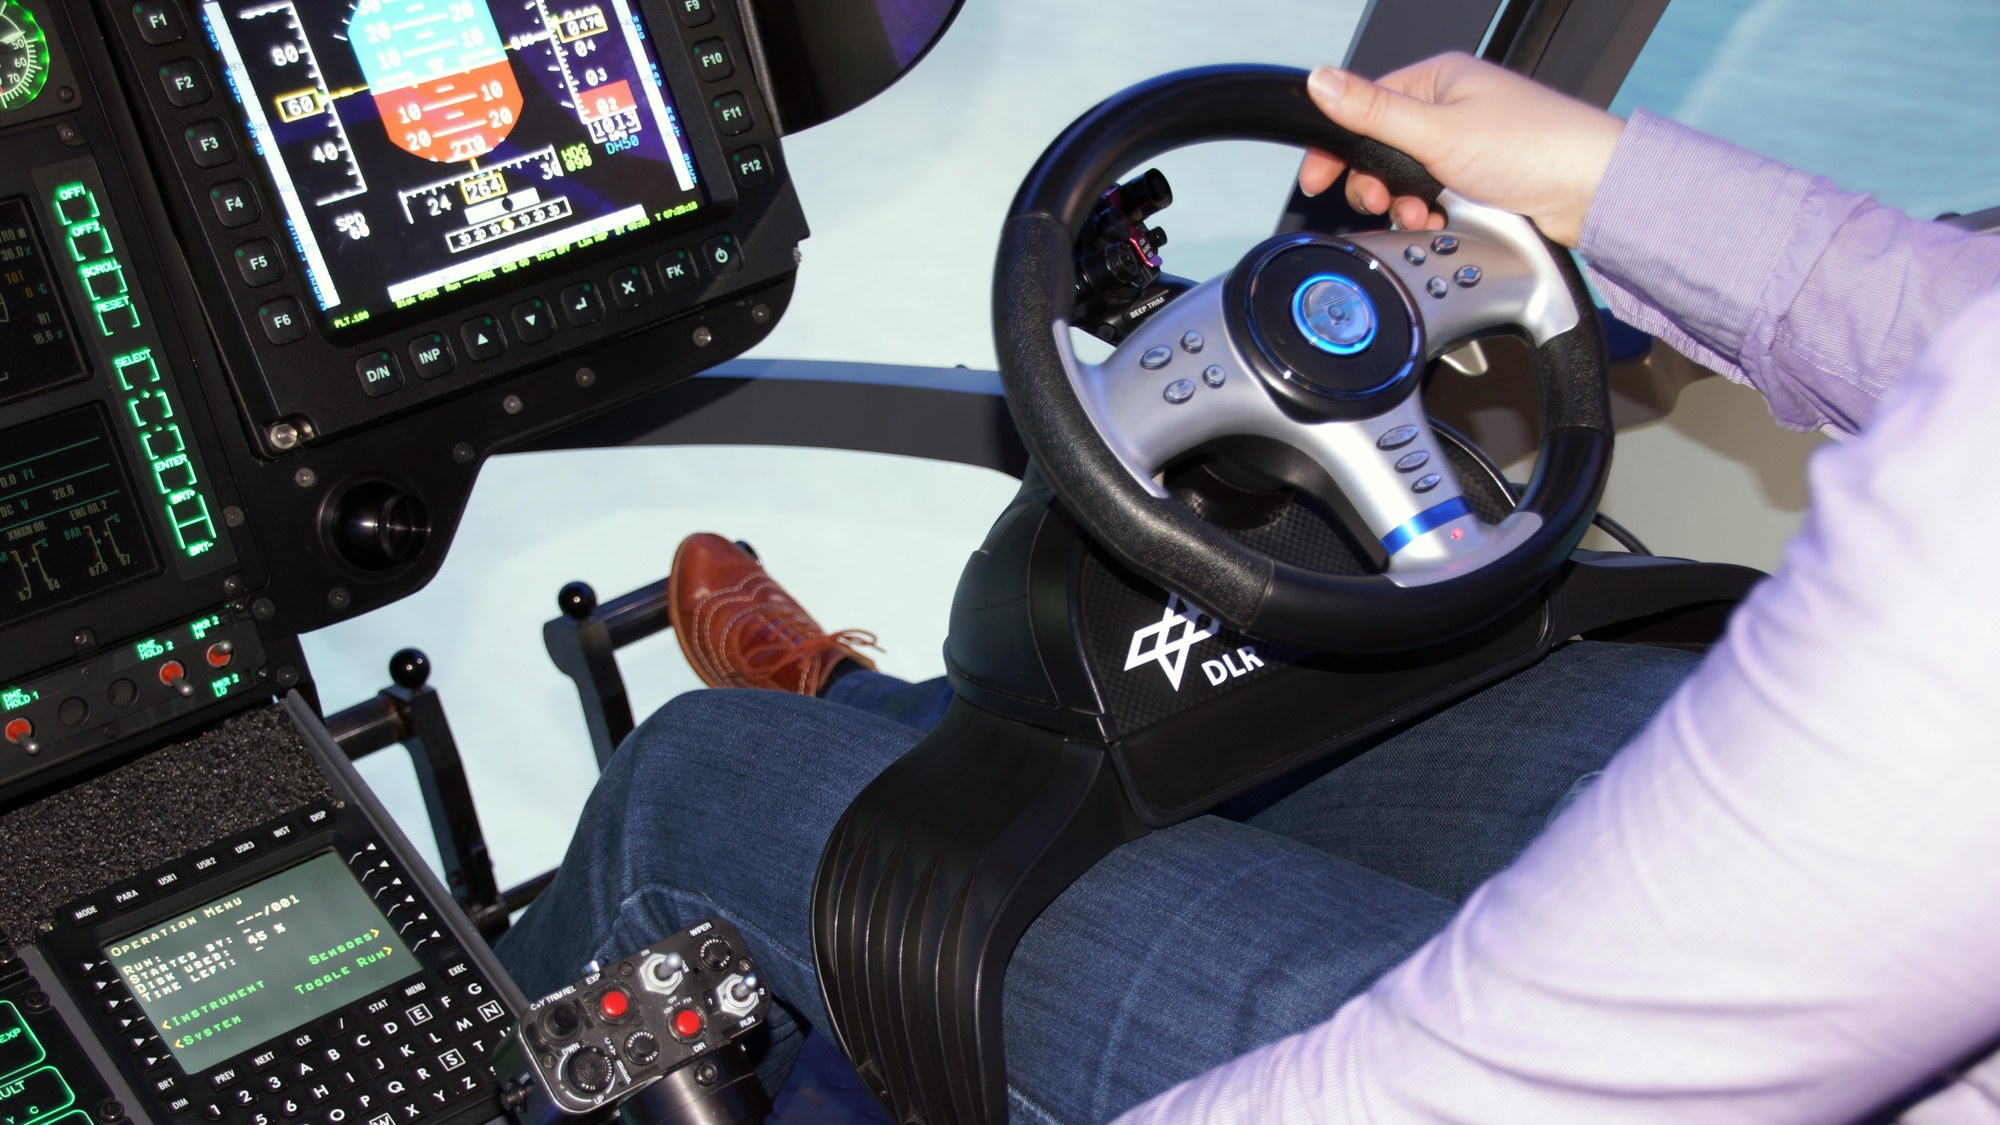 myCopter steering wheel in the simulator test